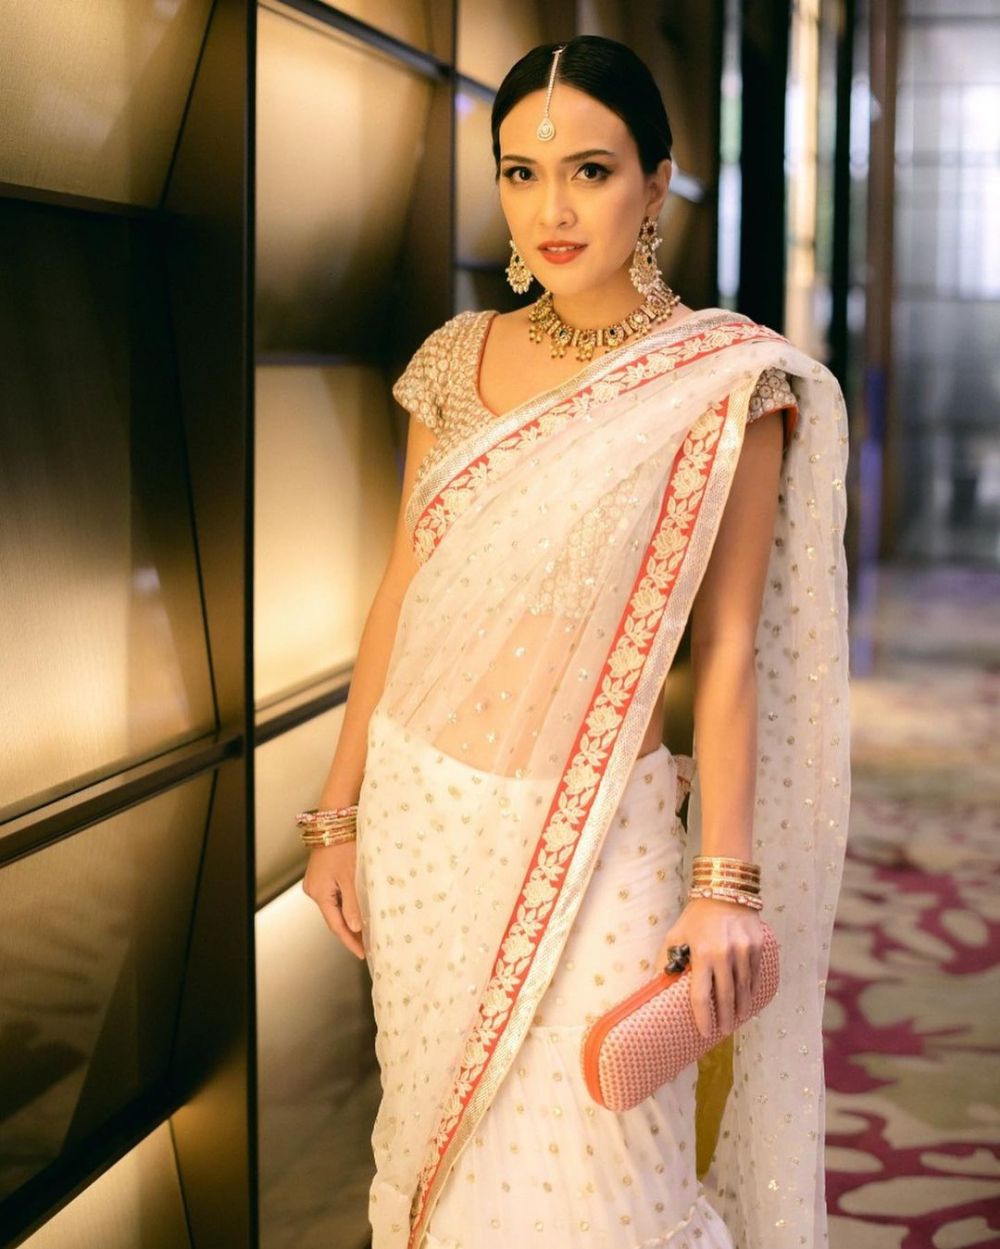 8 Potret Shandy Aulia kondangan pakai baju India, bak aktris Bollywood